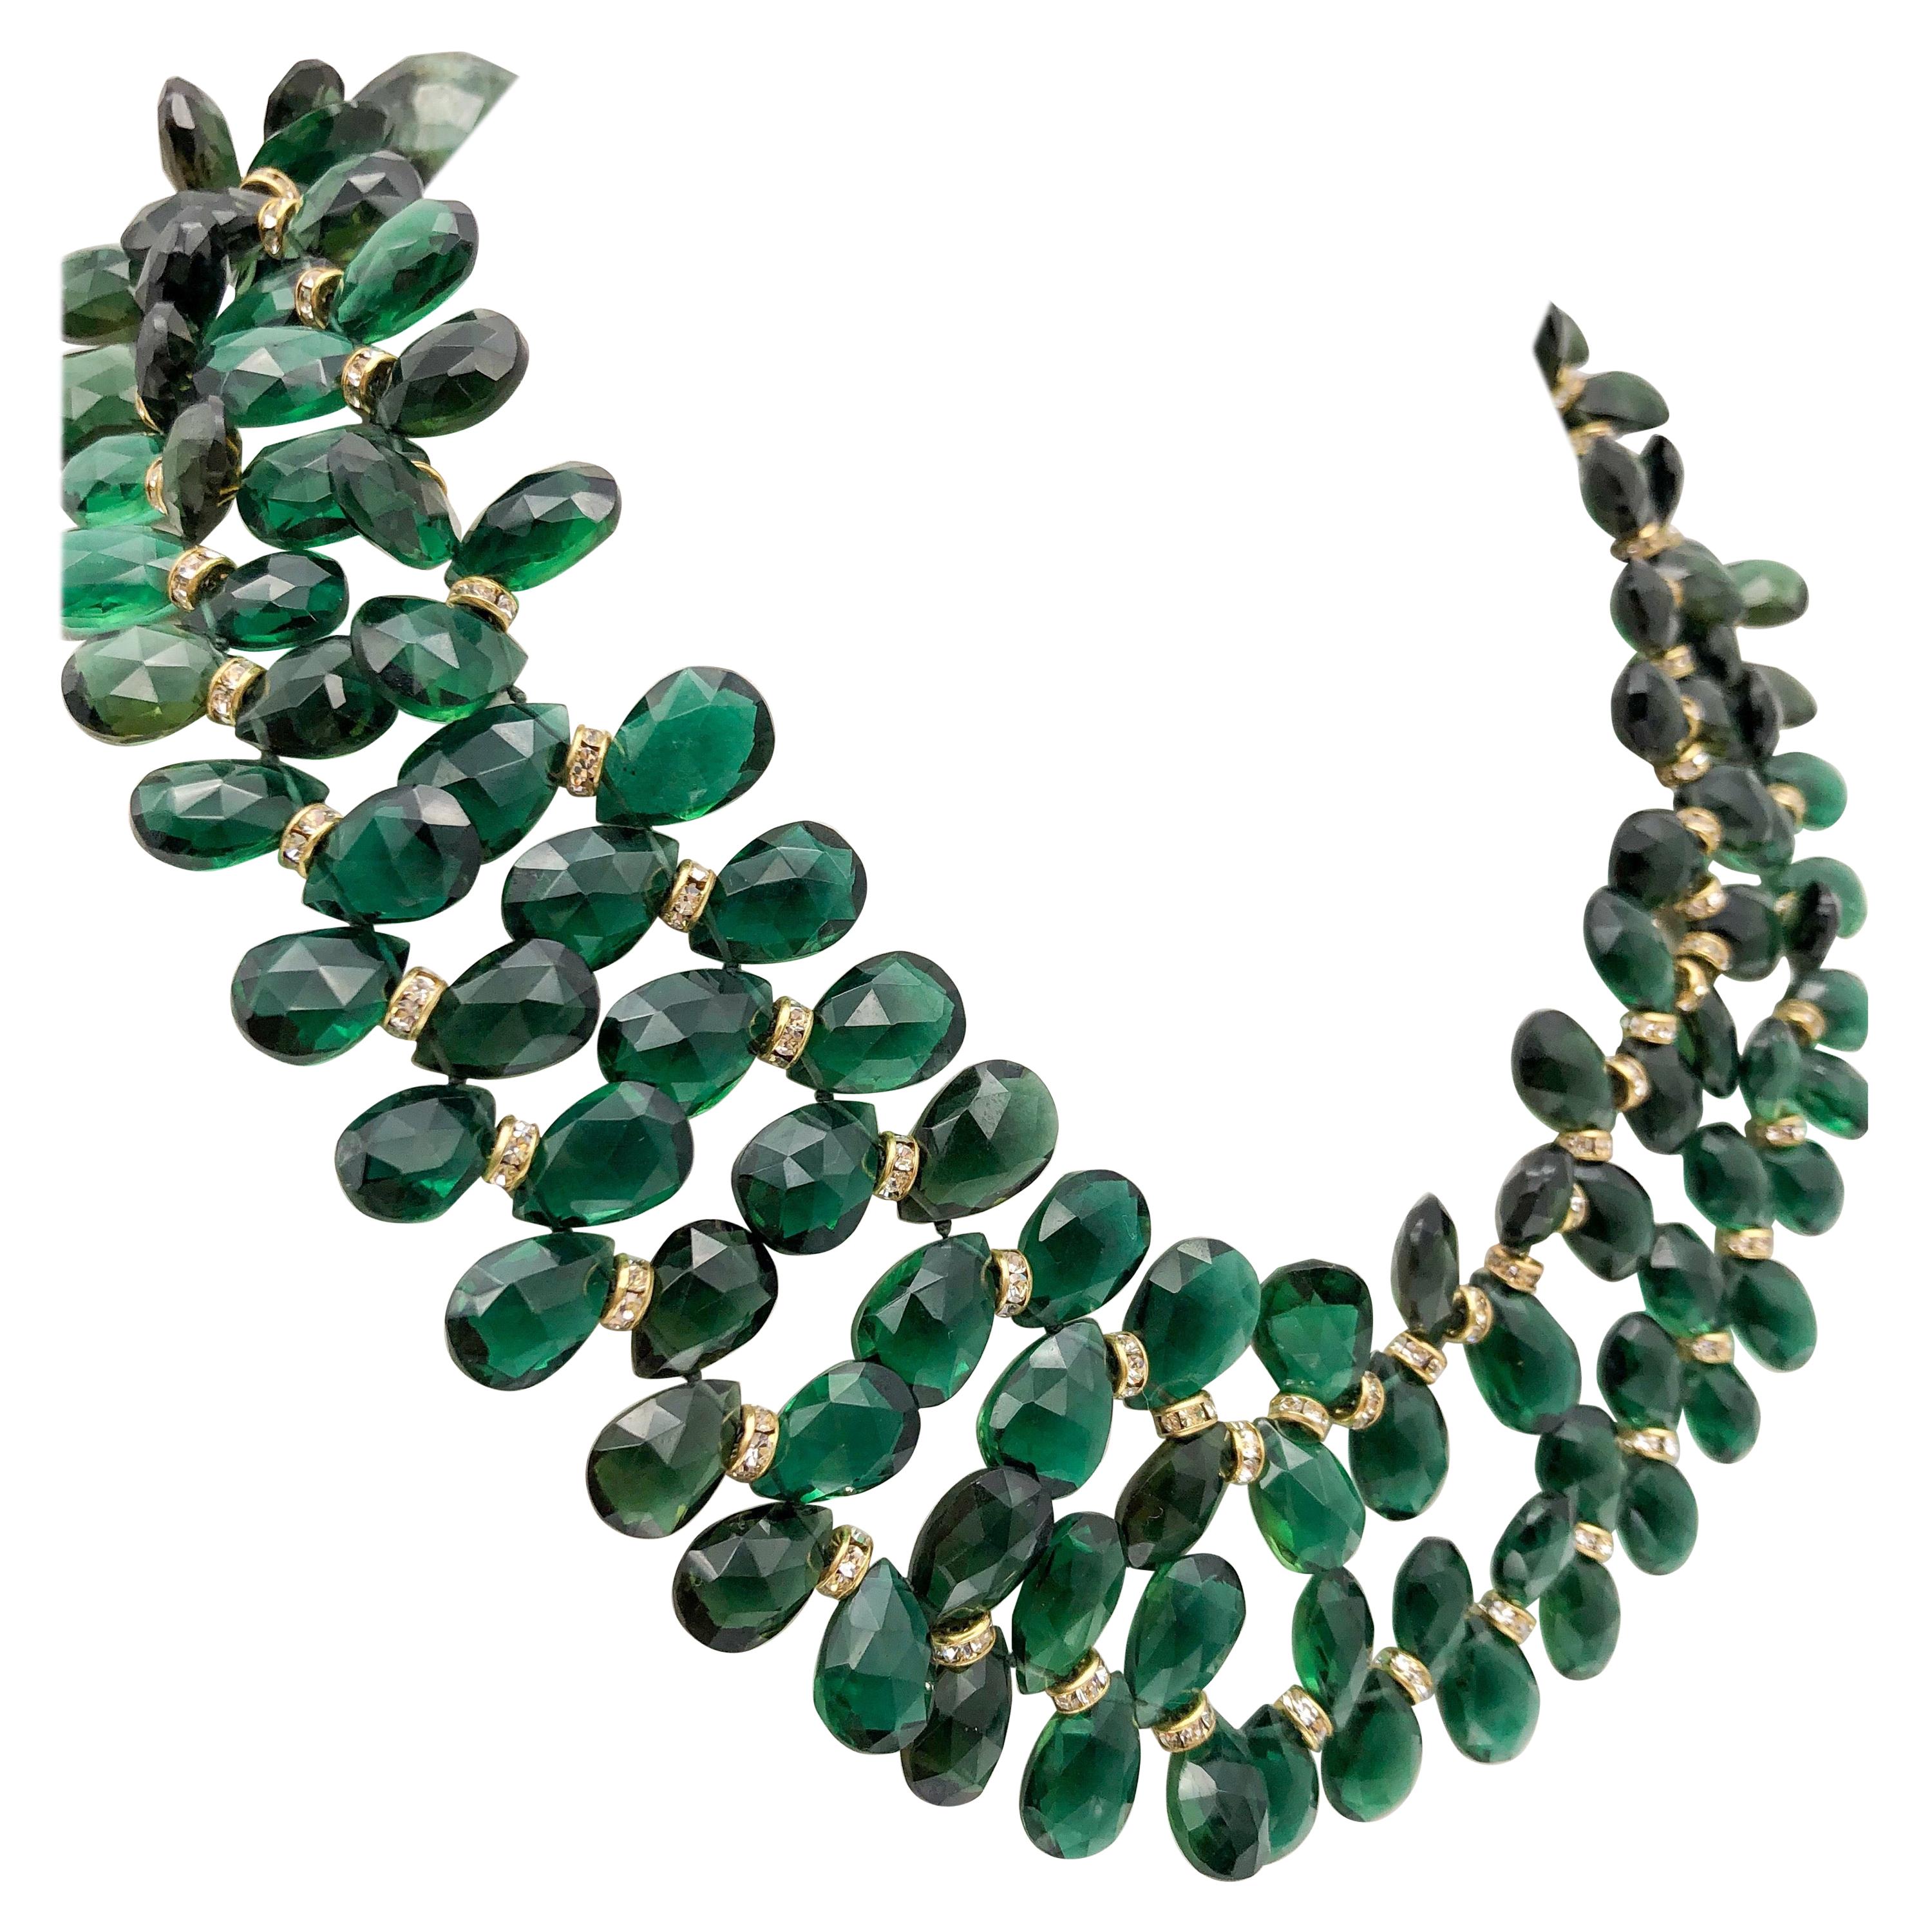 A.Jeschel Majestic Green Quartz with Emeralds necklace